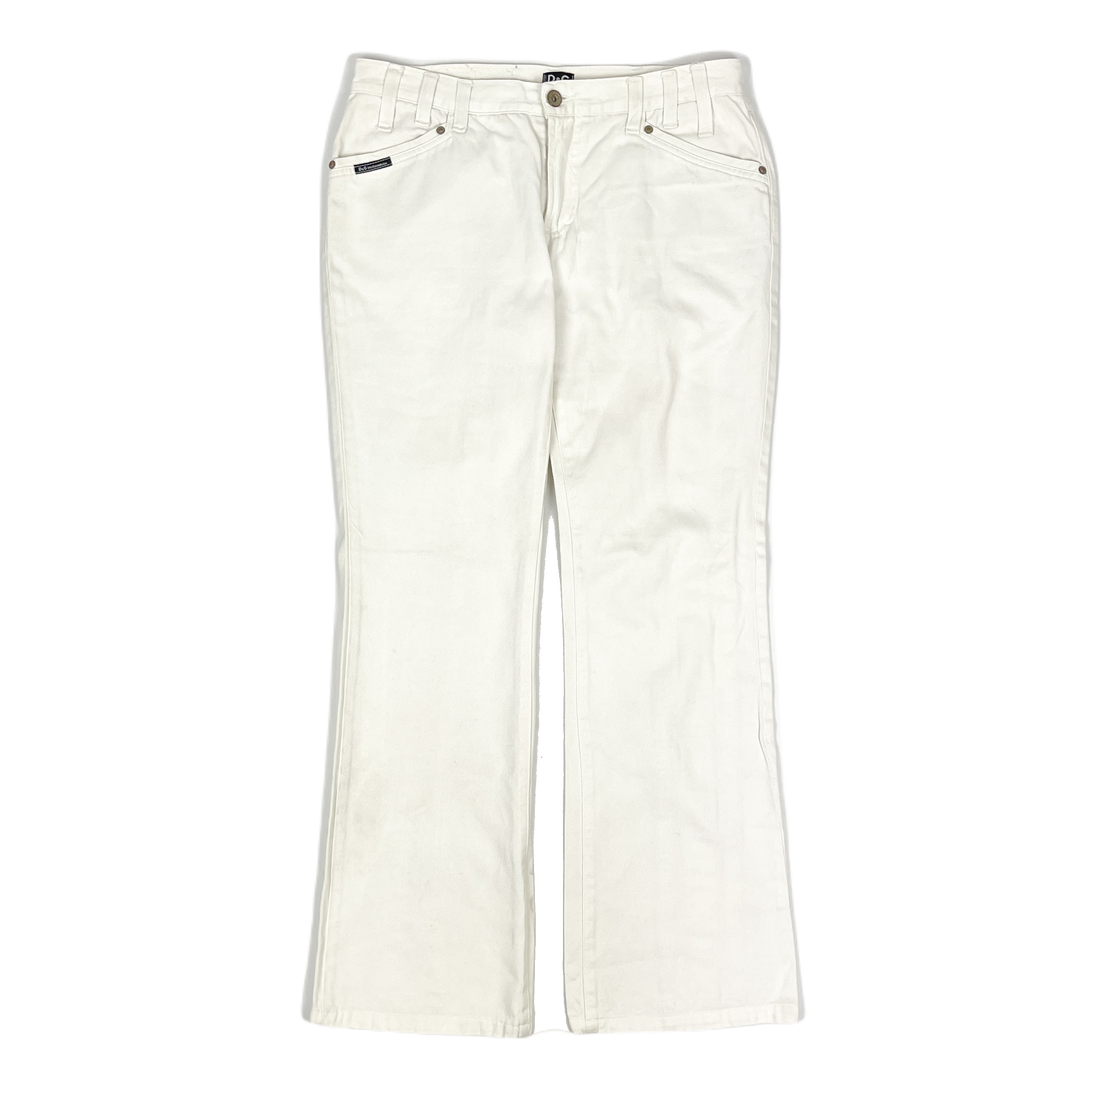 Dolce & Gabbana White Denim Pants 2000's